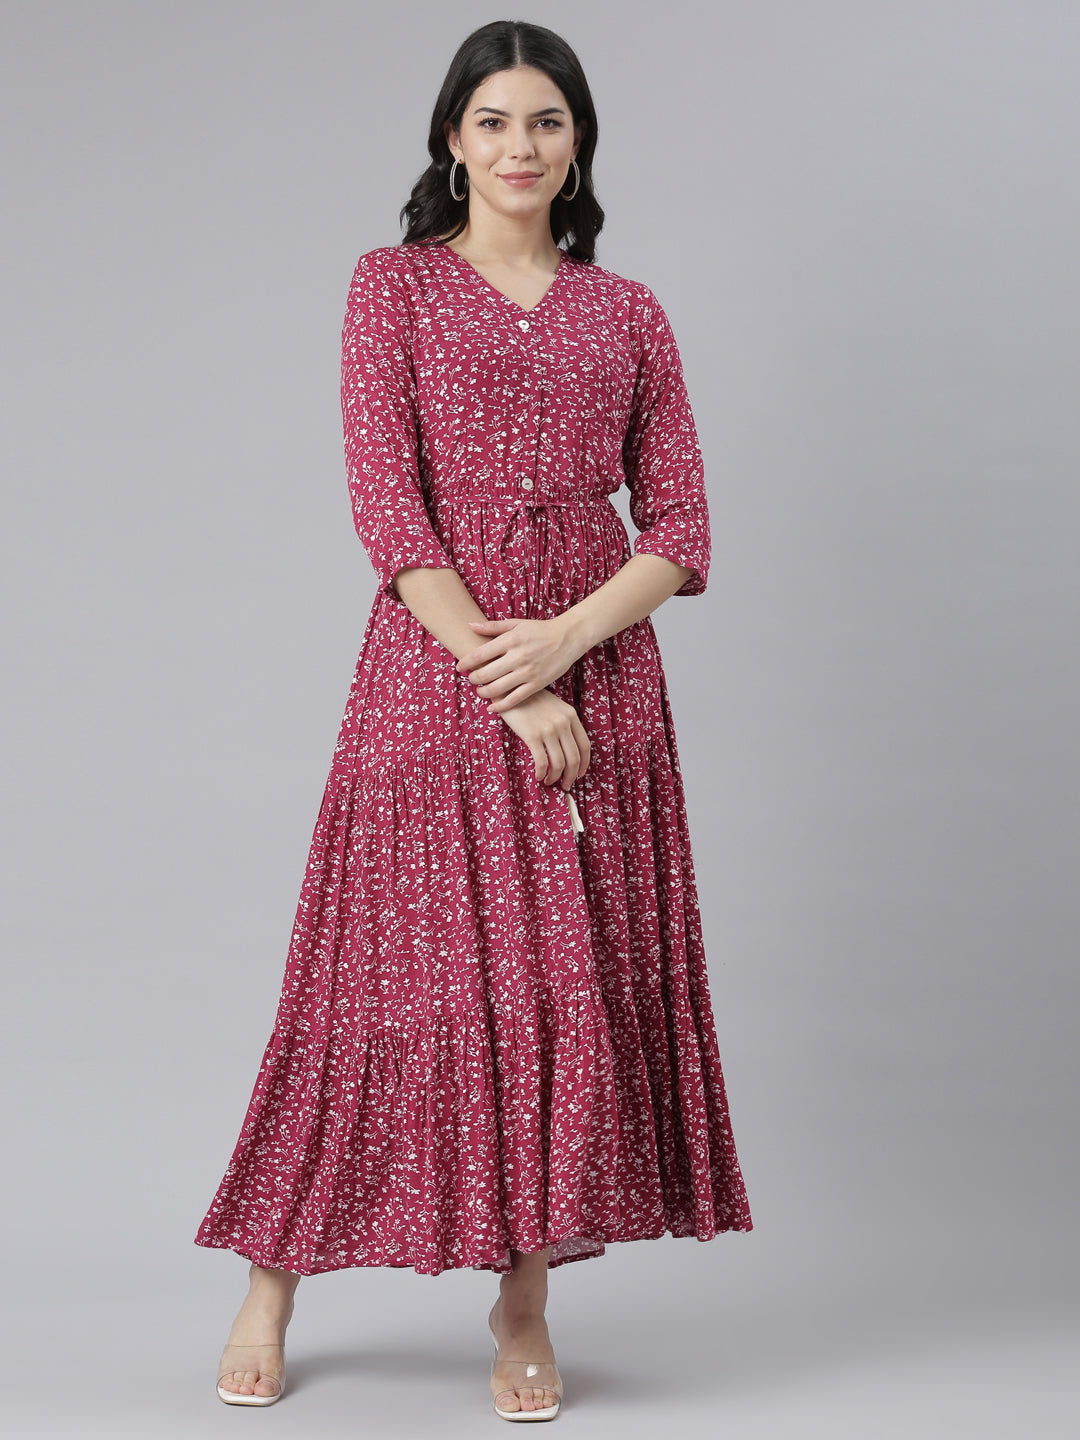 Neeru's Magenta Straight Casual Floral Dresses